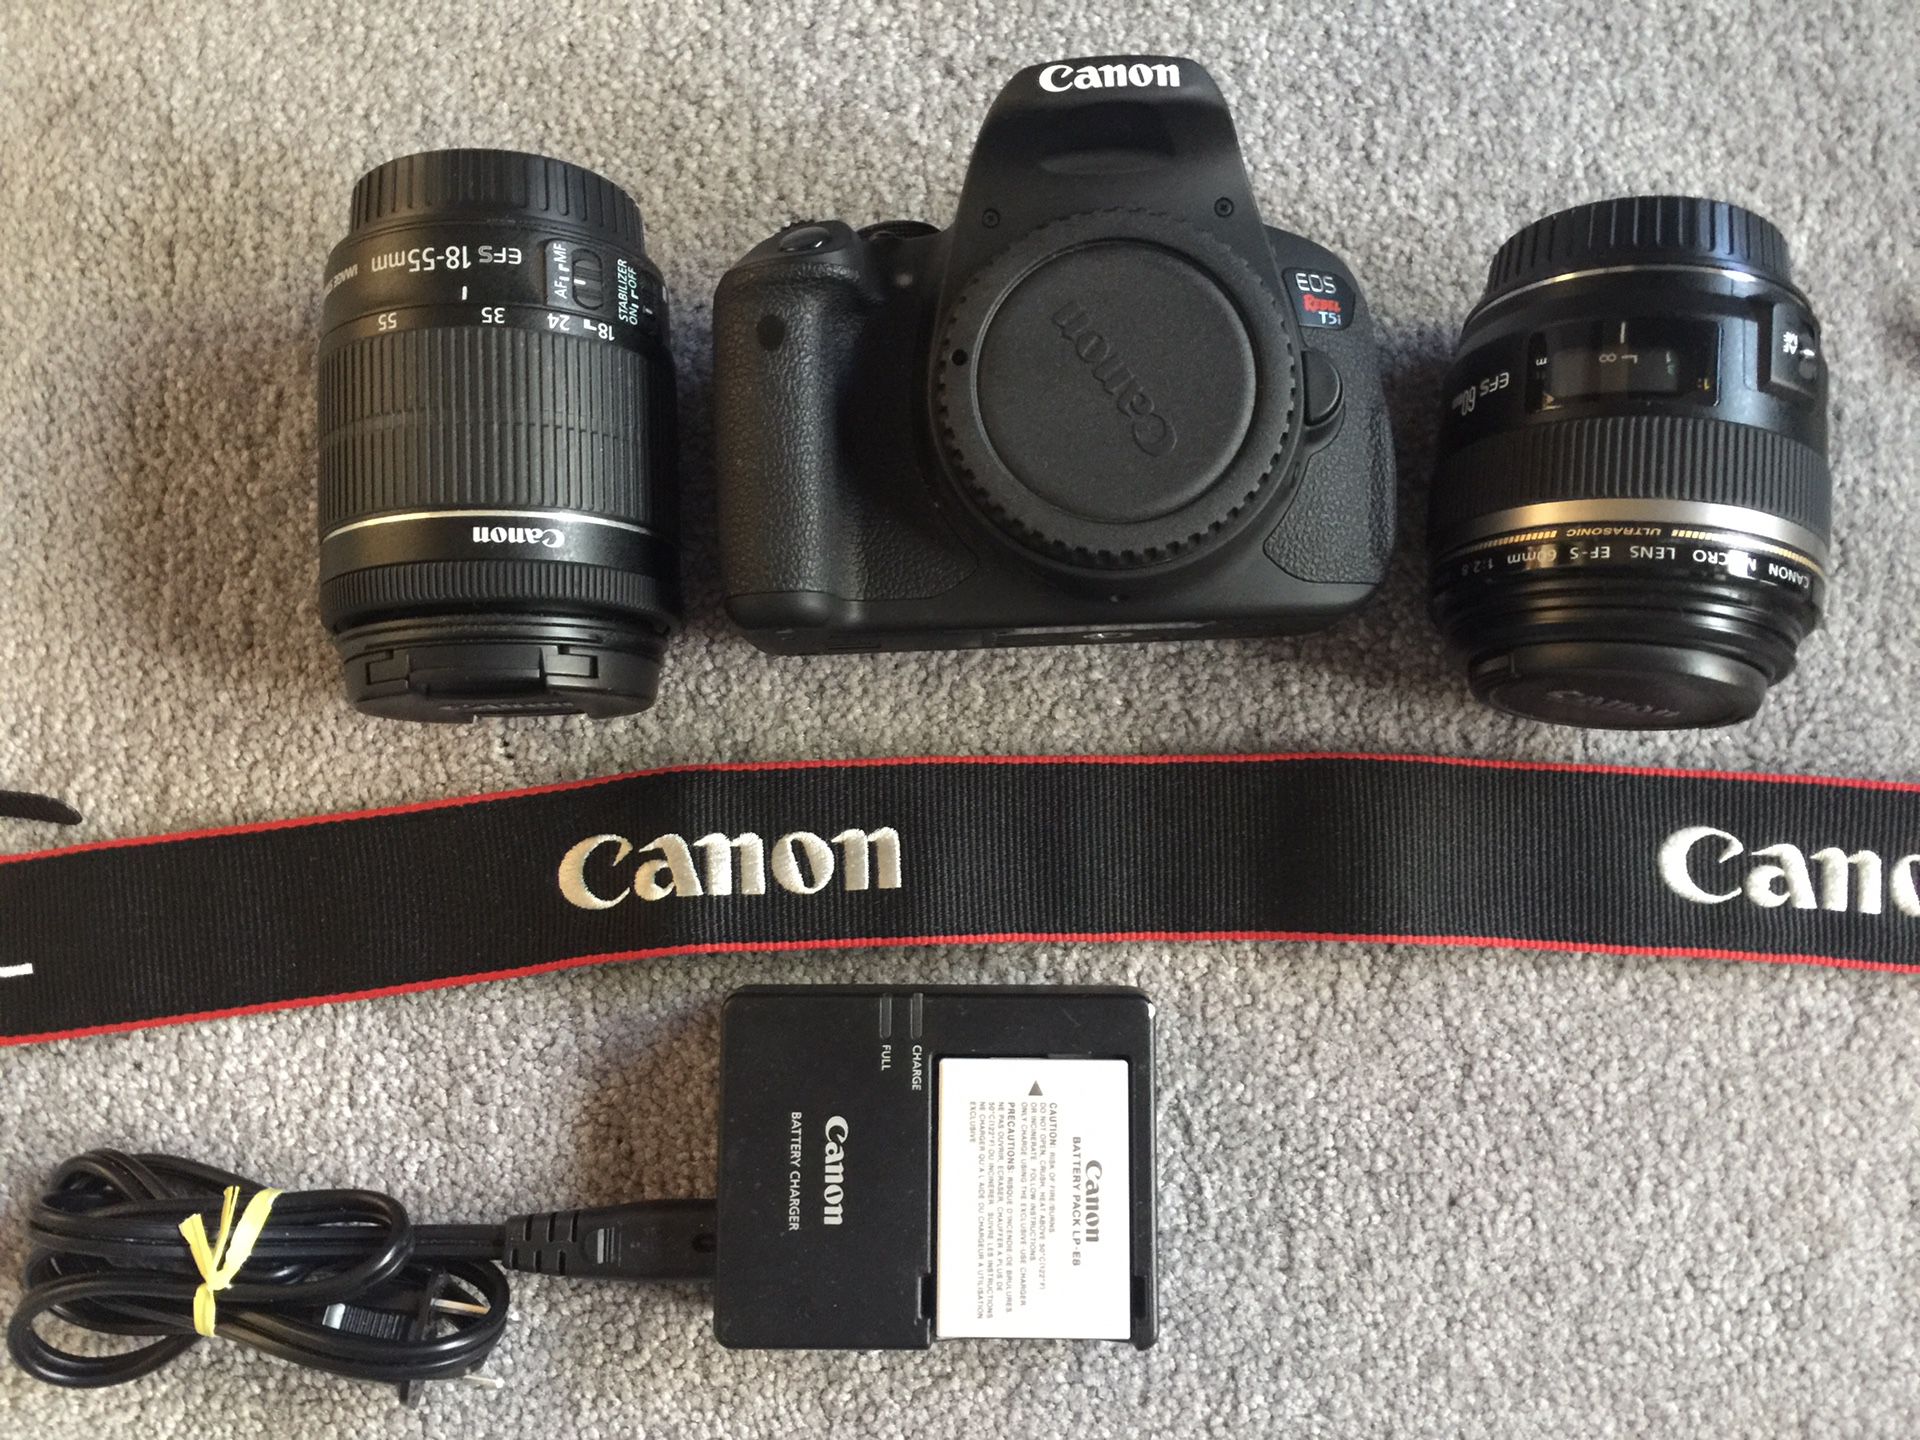 Canon EOS rebel T5i 18.0 megapixel digital SLR camera kit with 18–55 mm and 60 mm macro lens